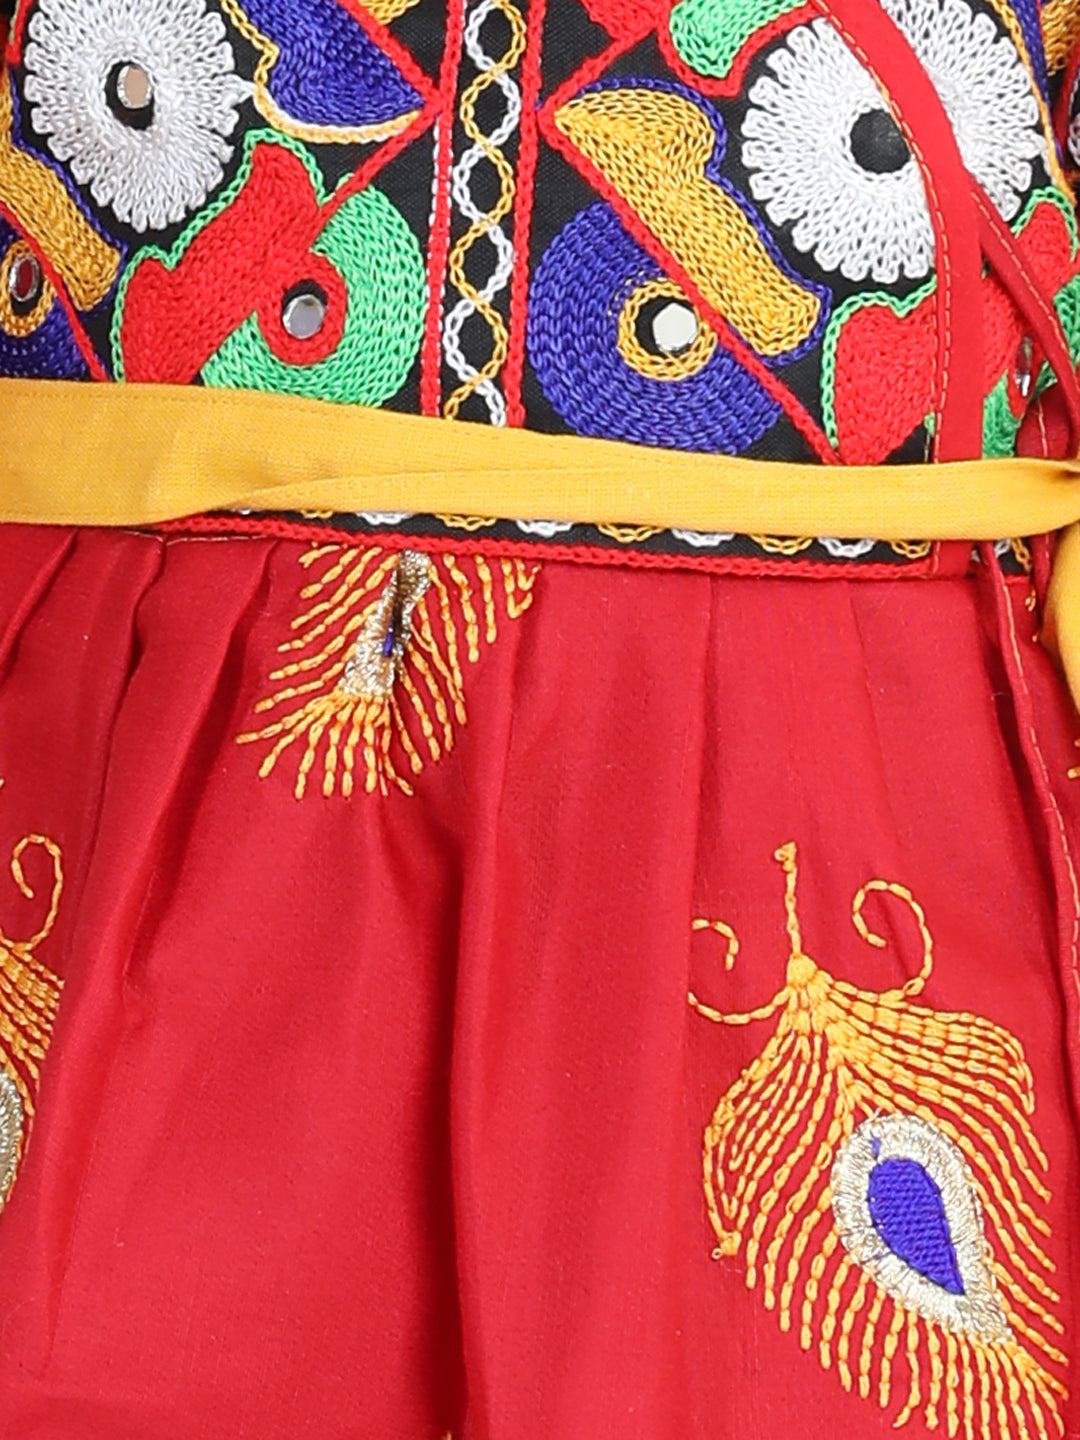 BownBee Embroidered Krishna Kanhaiya Dhoti Kurta and Radha Indo western Top Dhoti with Mukut Bansuri Belt -Red